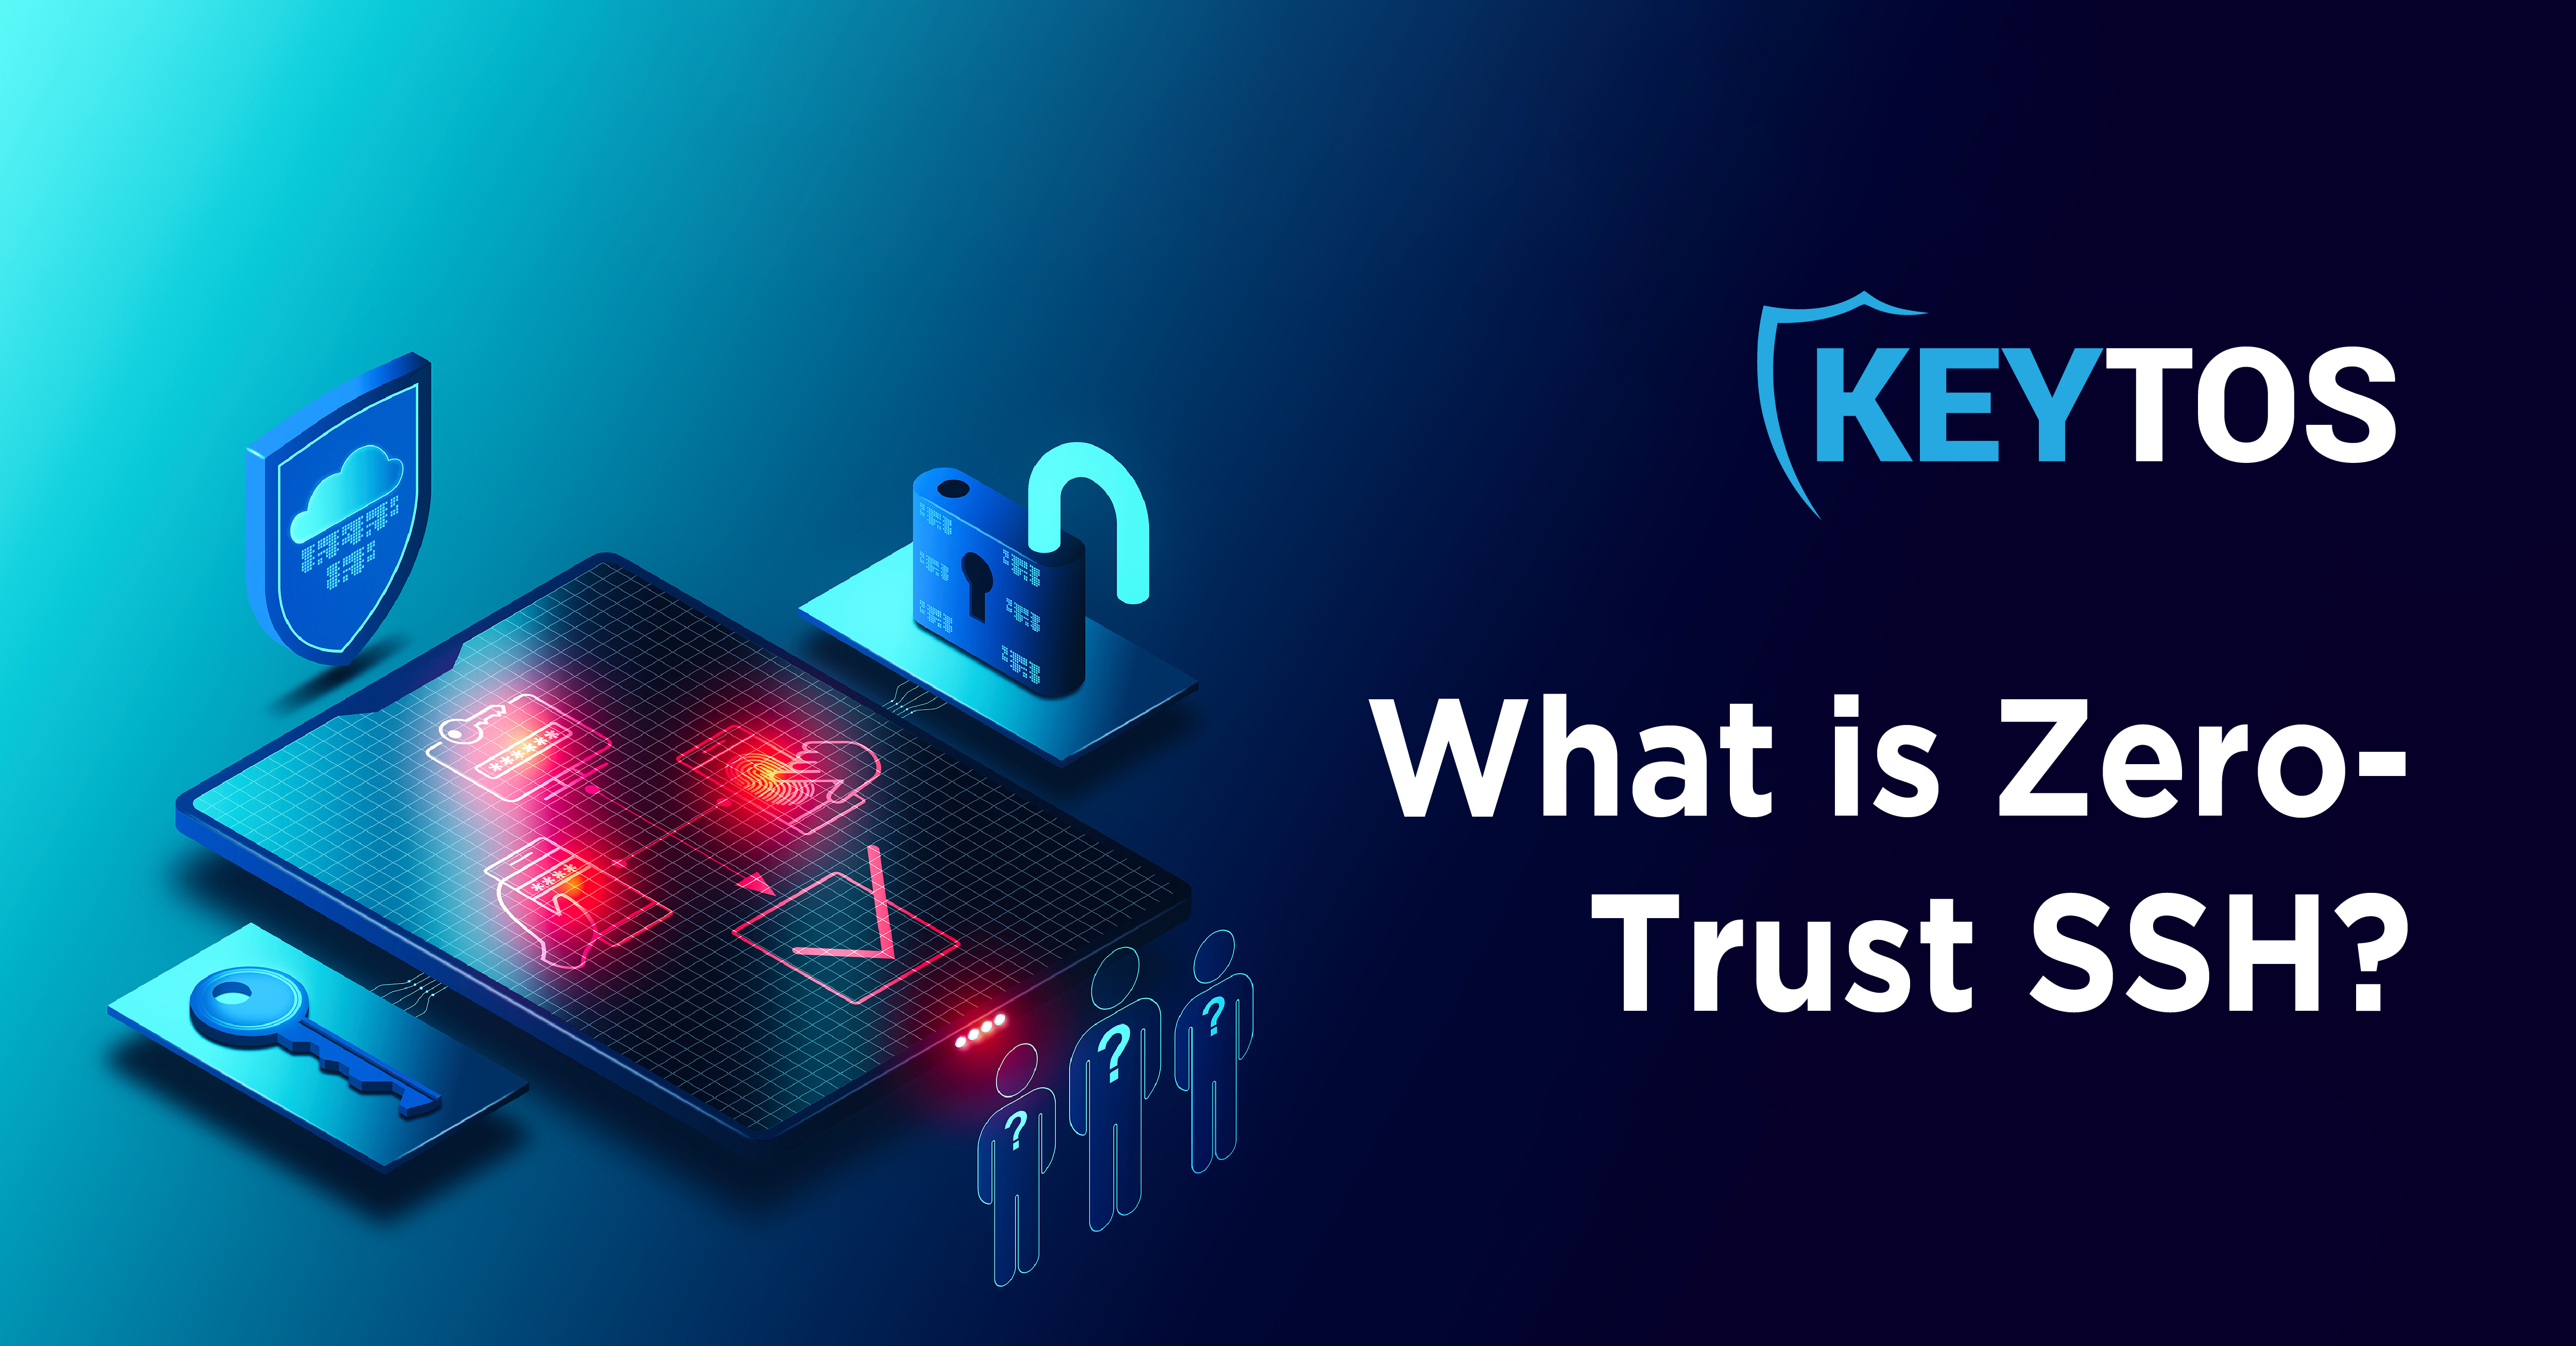 What is Zero Trust SSH?